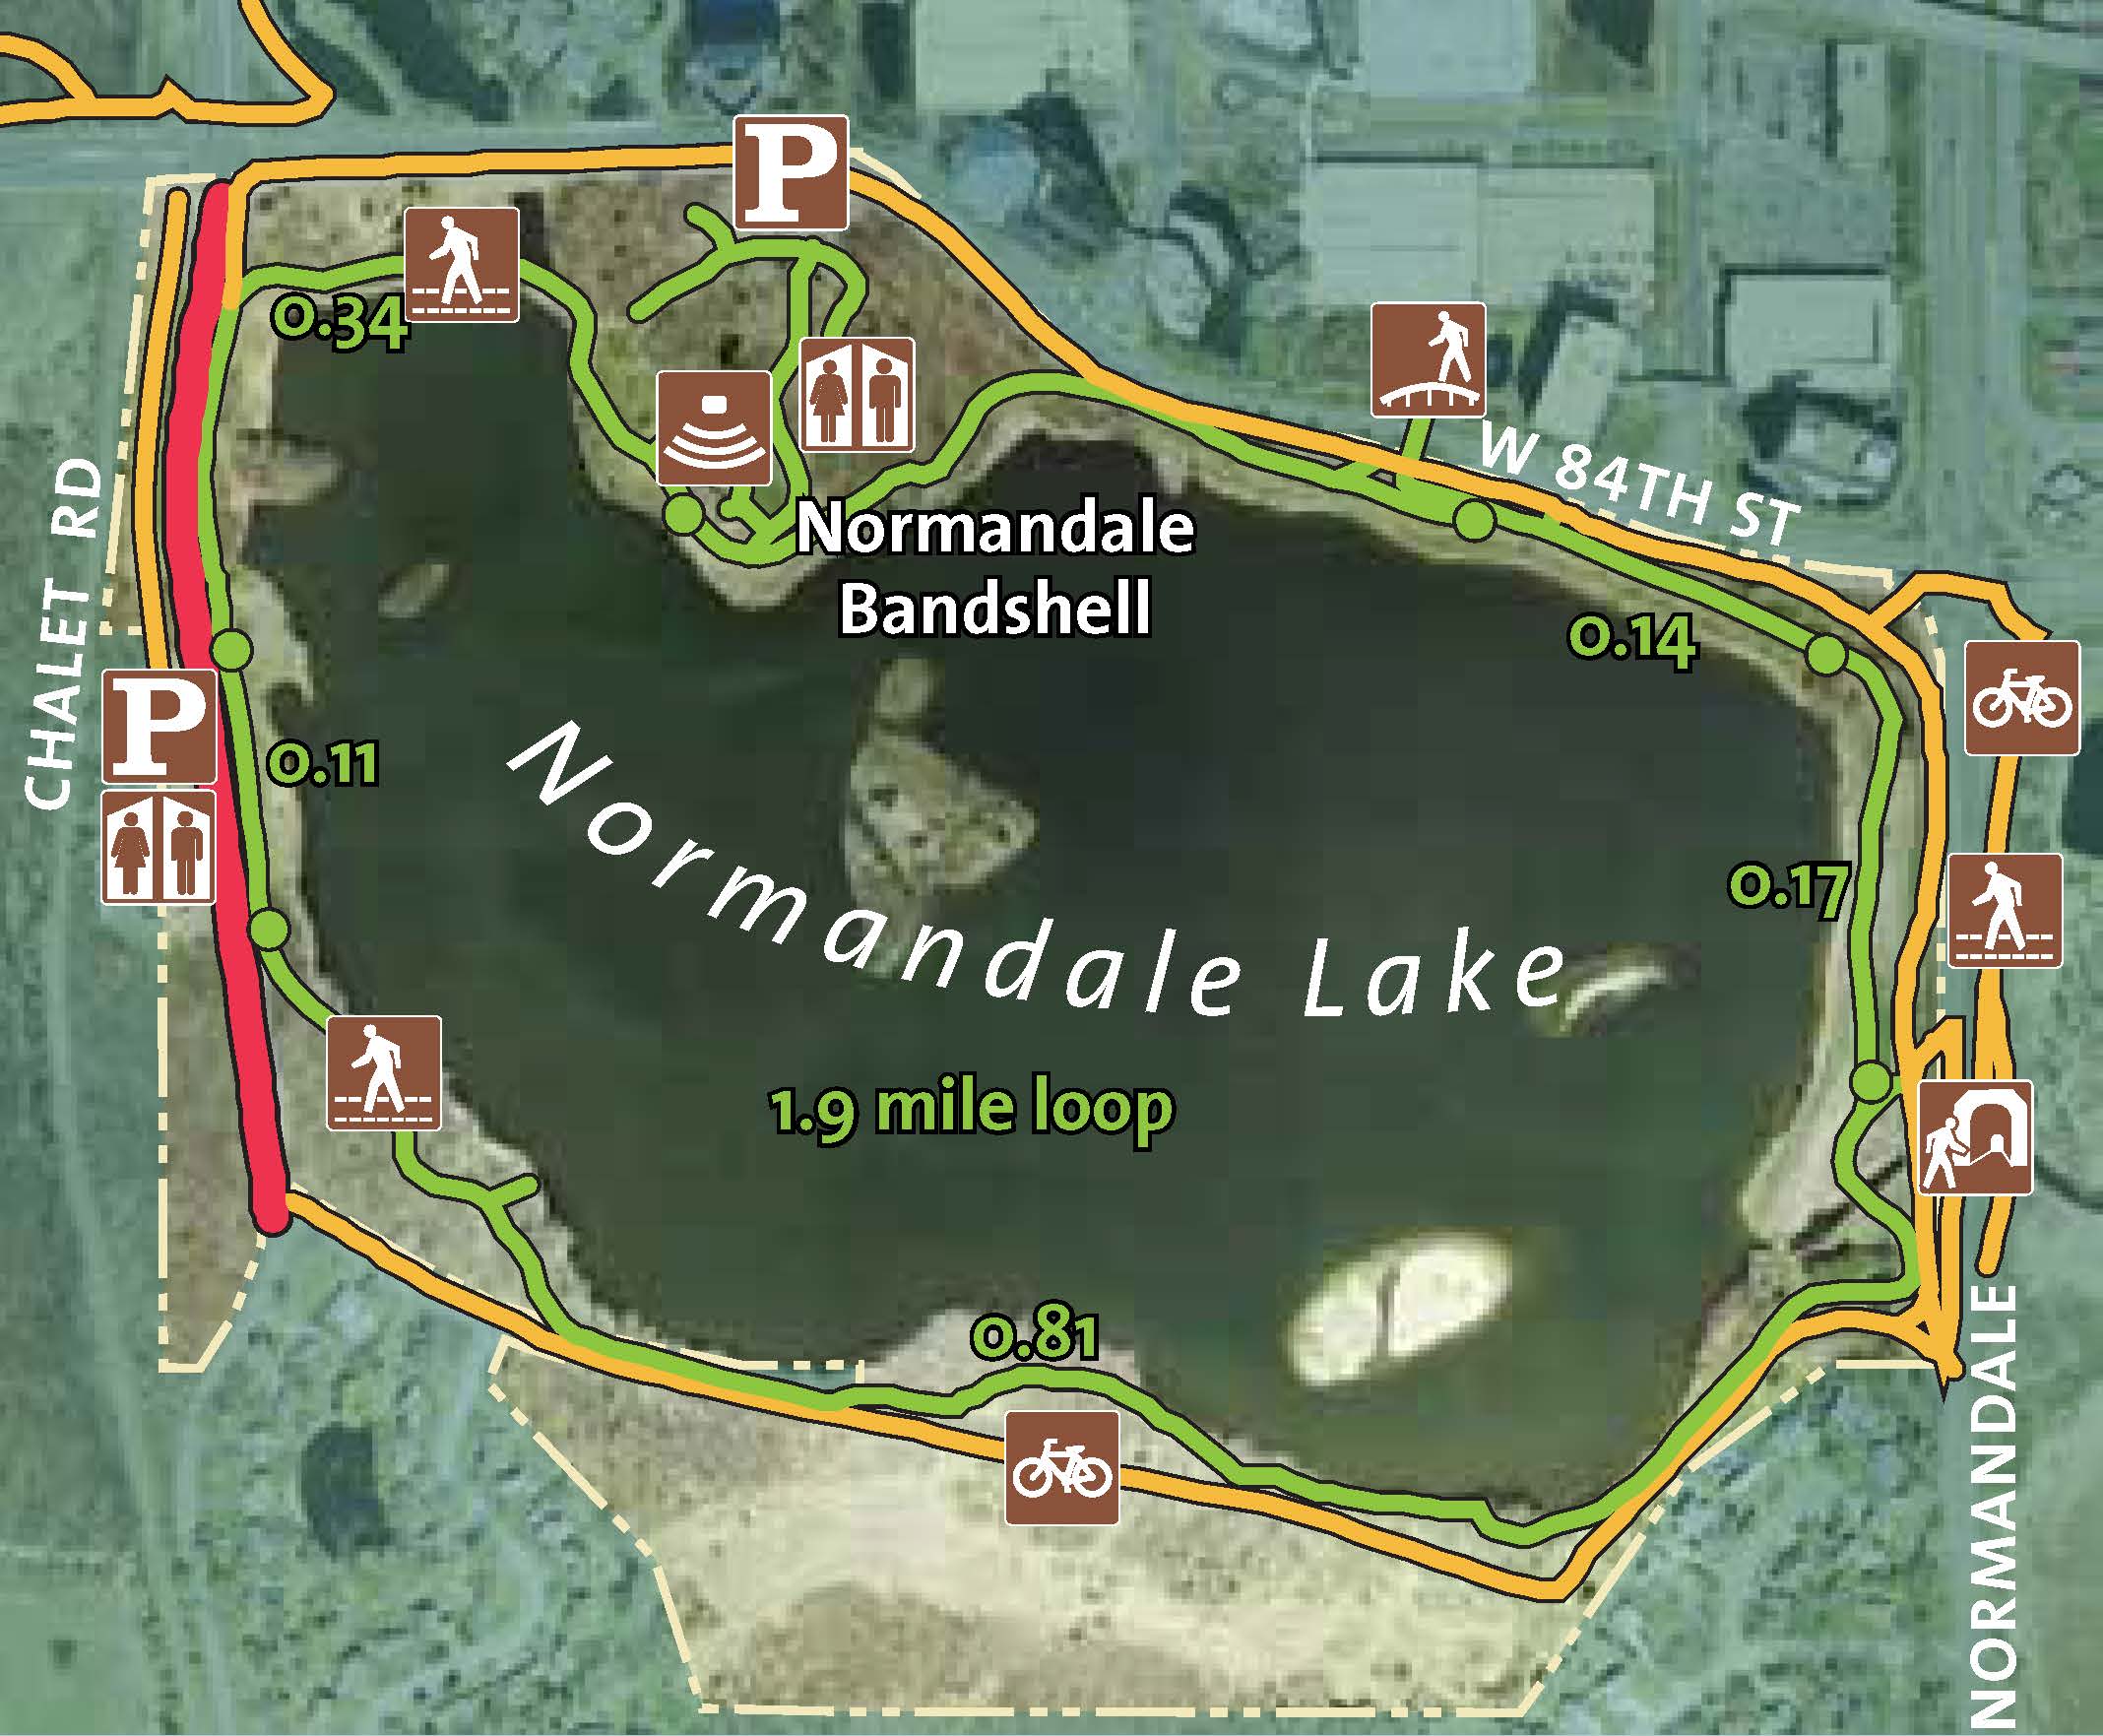 Hiking and biking trail map for Normandale Lake.